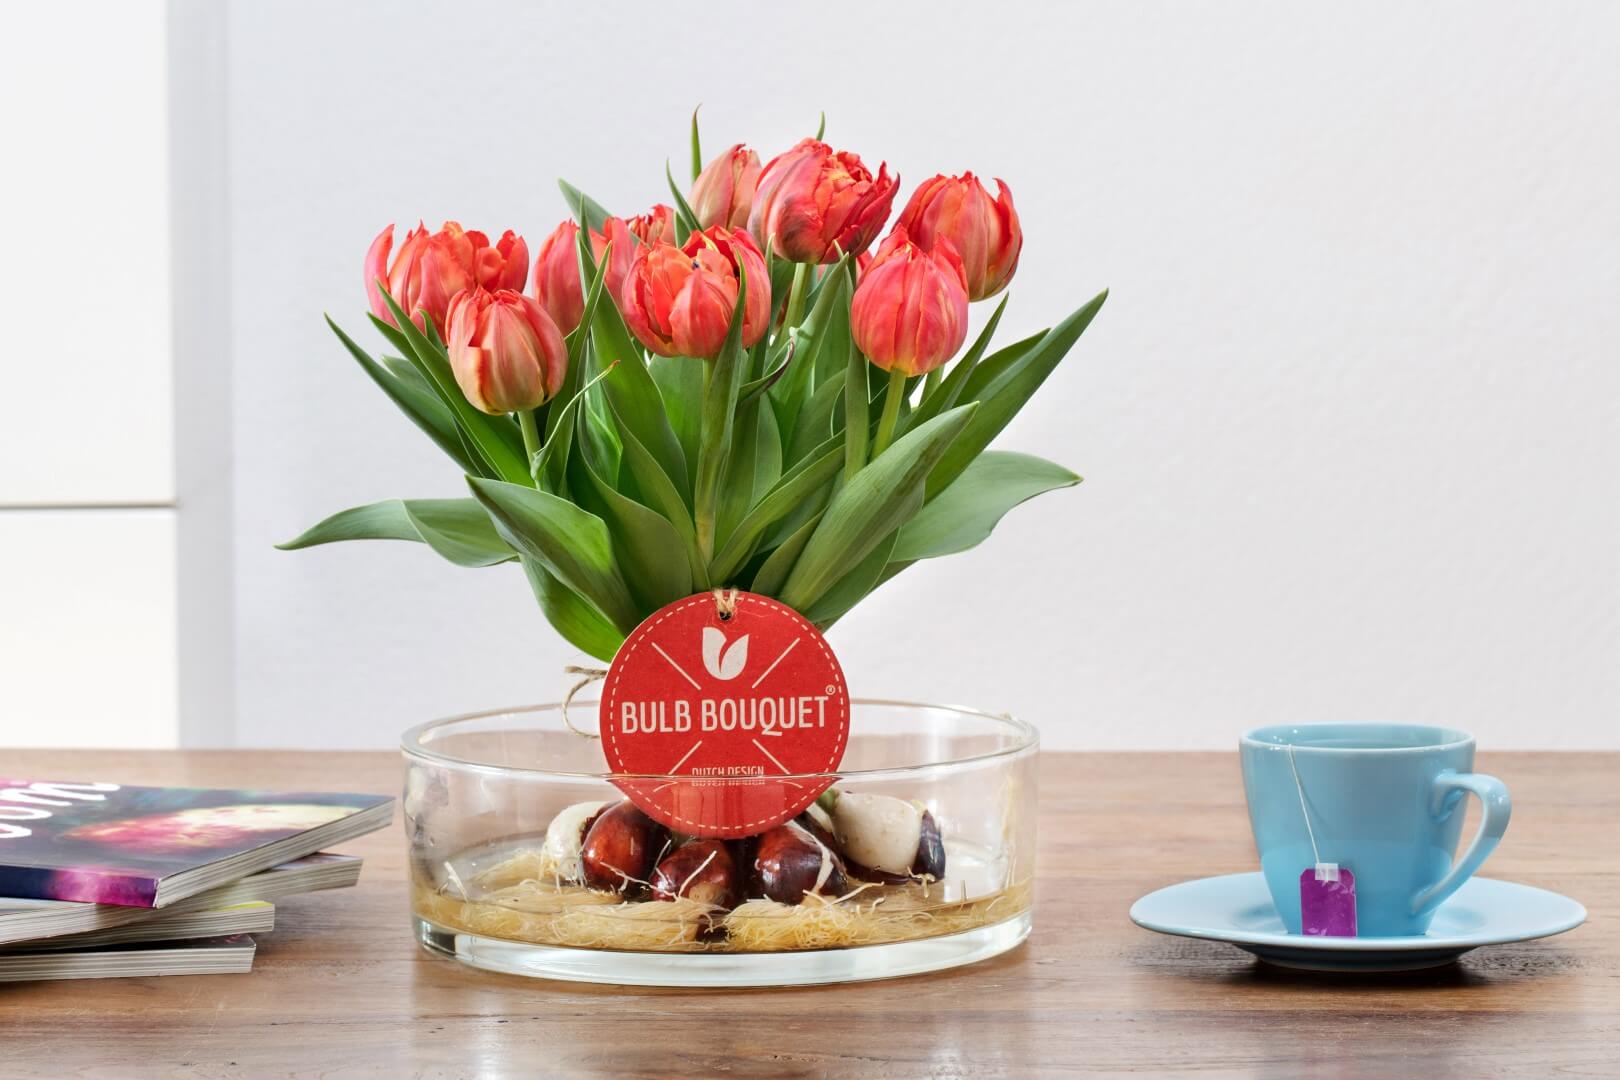 Bulb Bouquet weer beschikbaar!